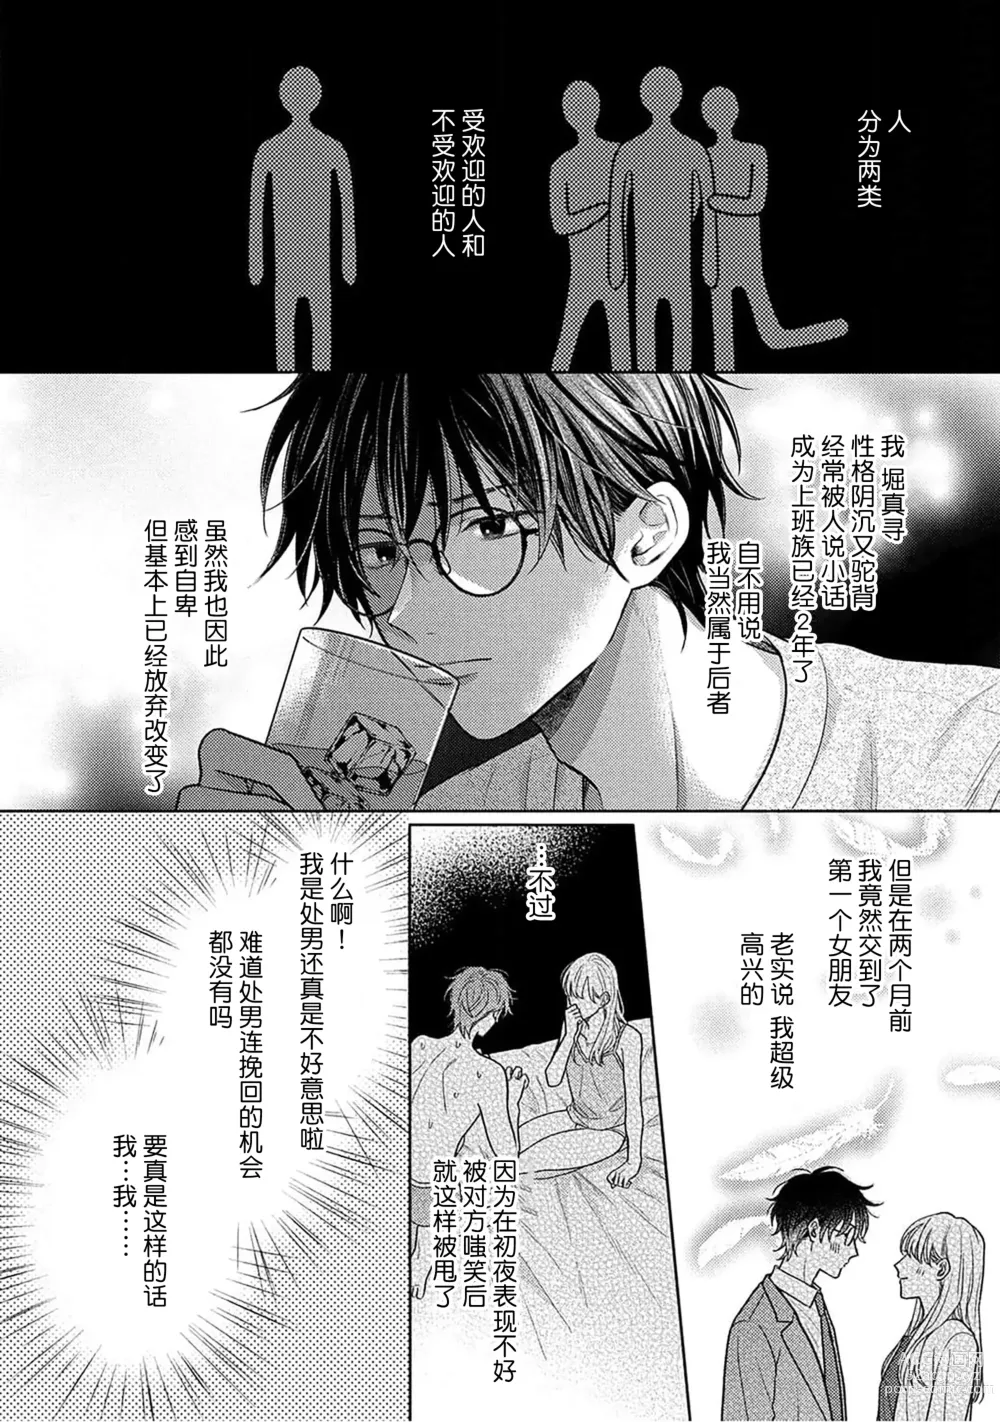 Page 7 of manga 这真的是恋爱吗?